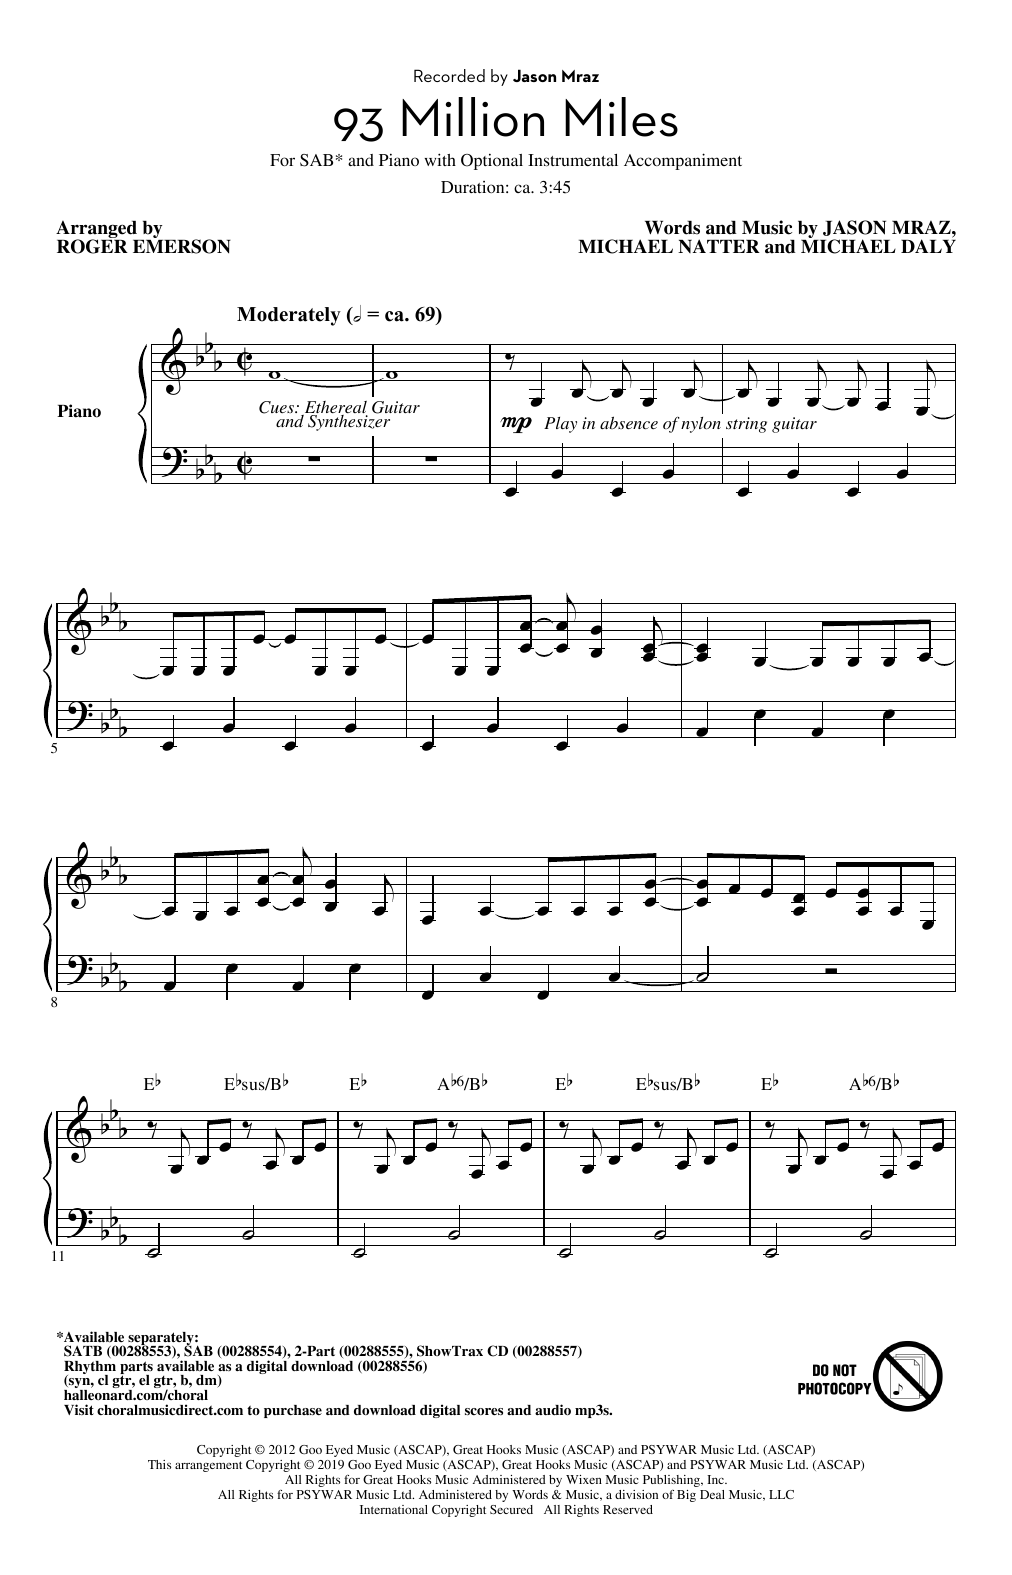 Jason Mraz 93 Million Miles (arr. Roger Emerson) sheet music notes and chords arranged for SAB Choir